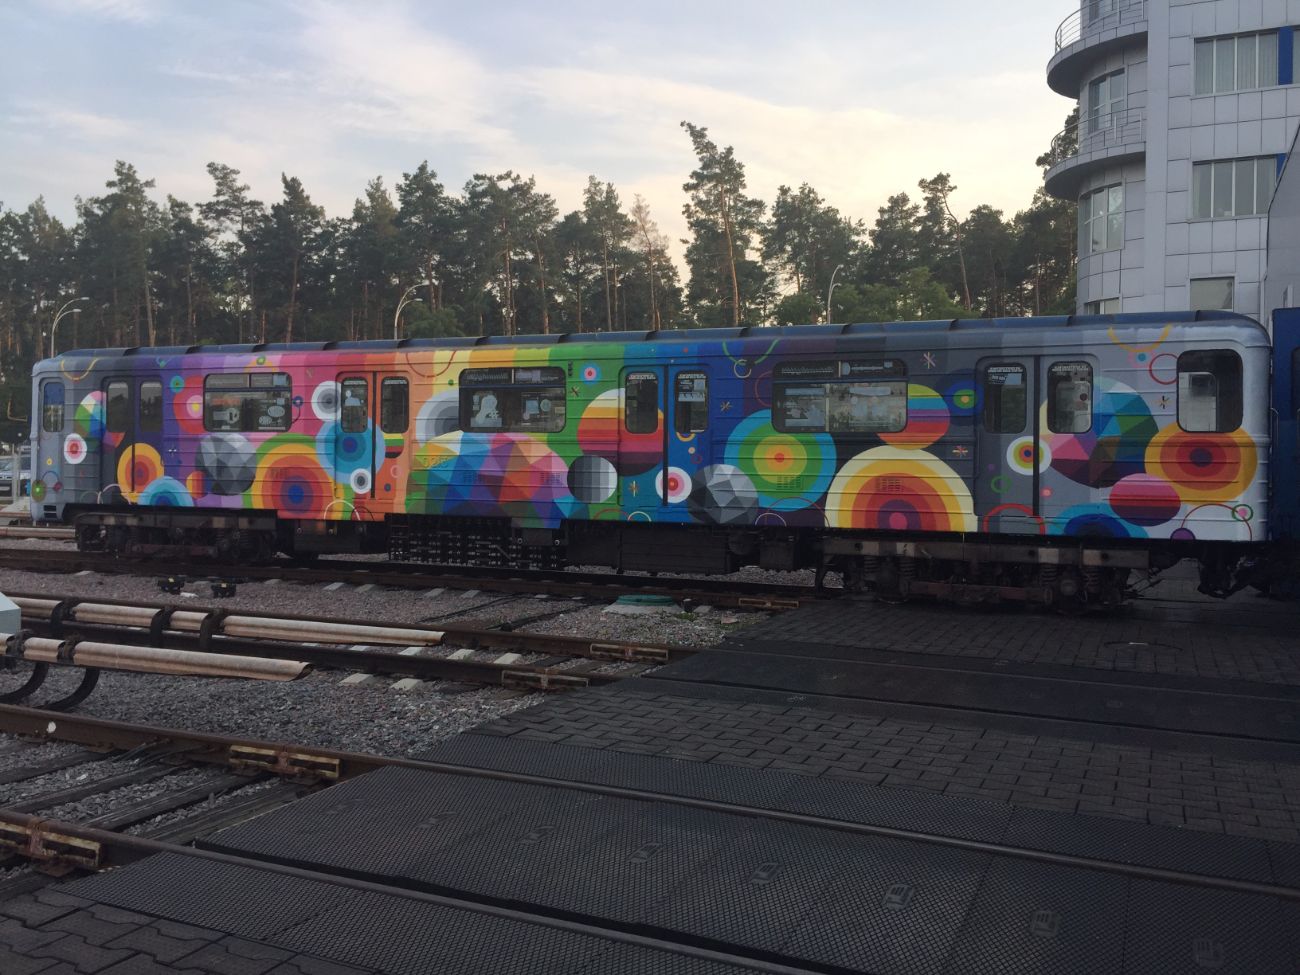 okuda-san-miguels-5-car-train-in-kiev-ukraine-thevandallist-6